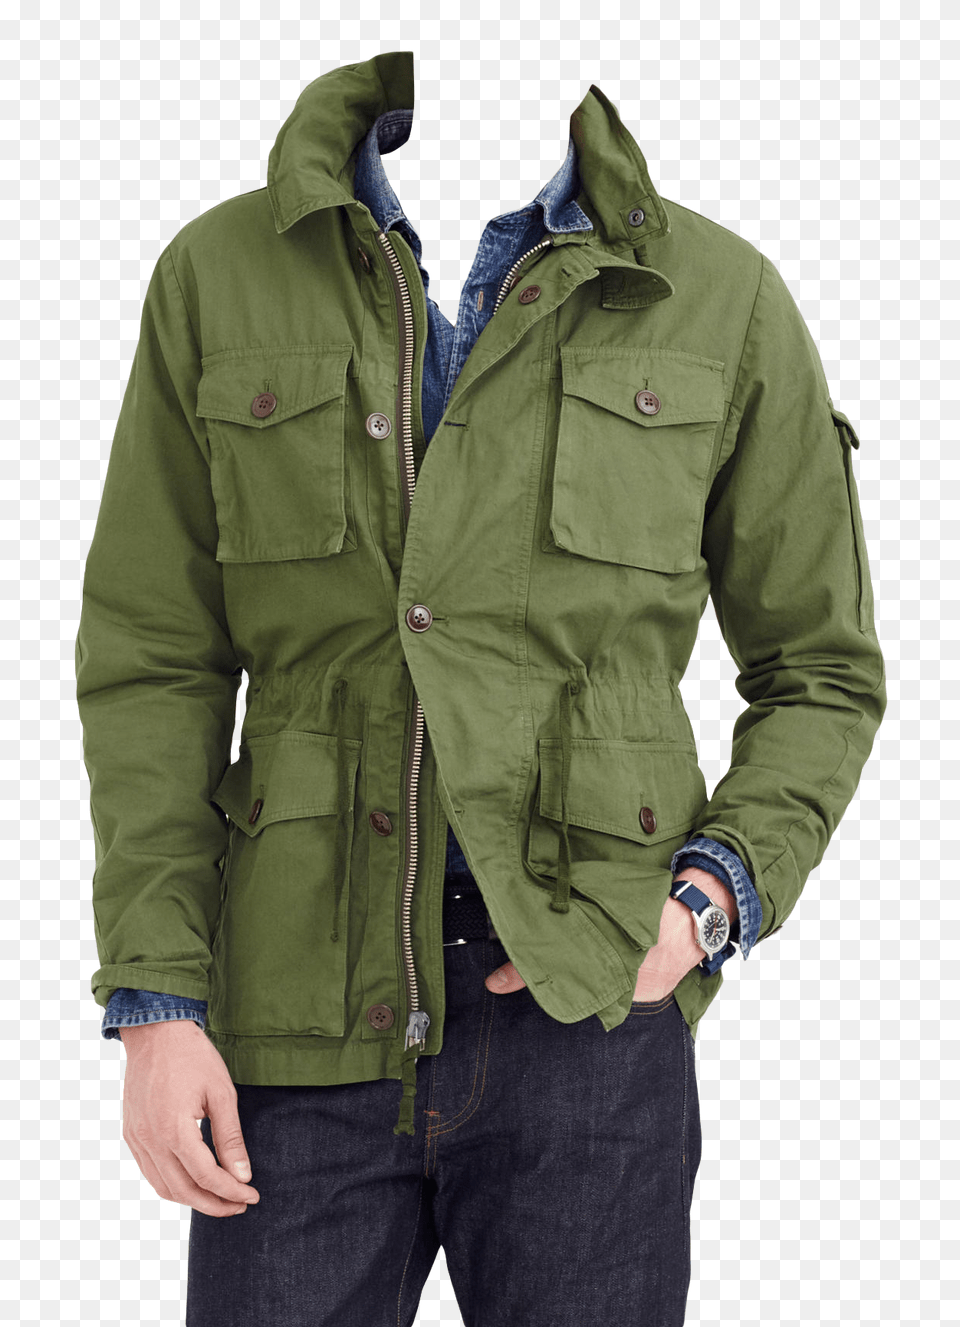 Pngpix Com Jacket Transparent Image, Clothing, Coat, Vest, Jeans Free Png Download